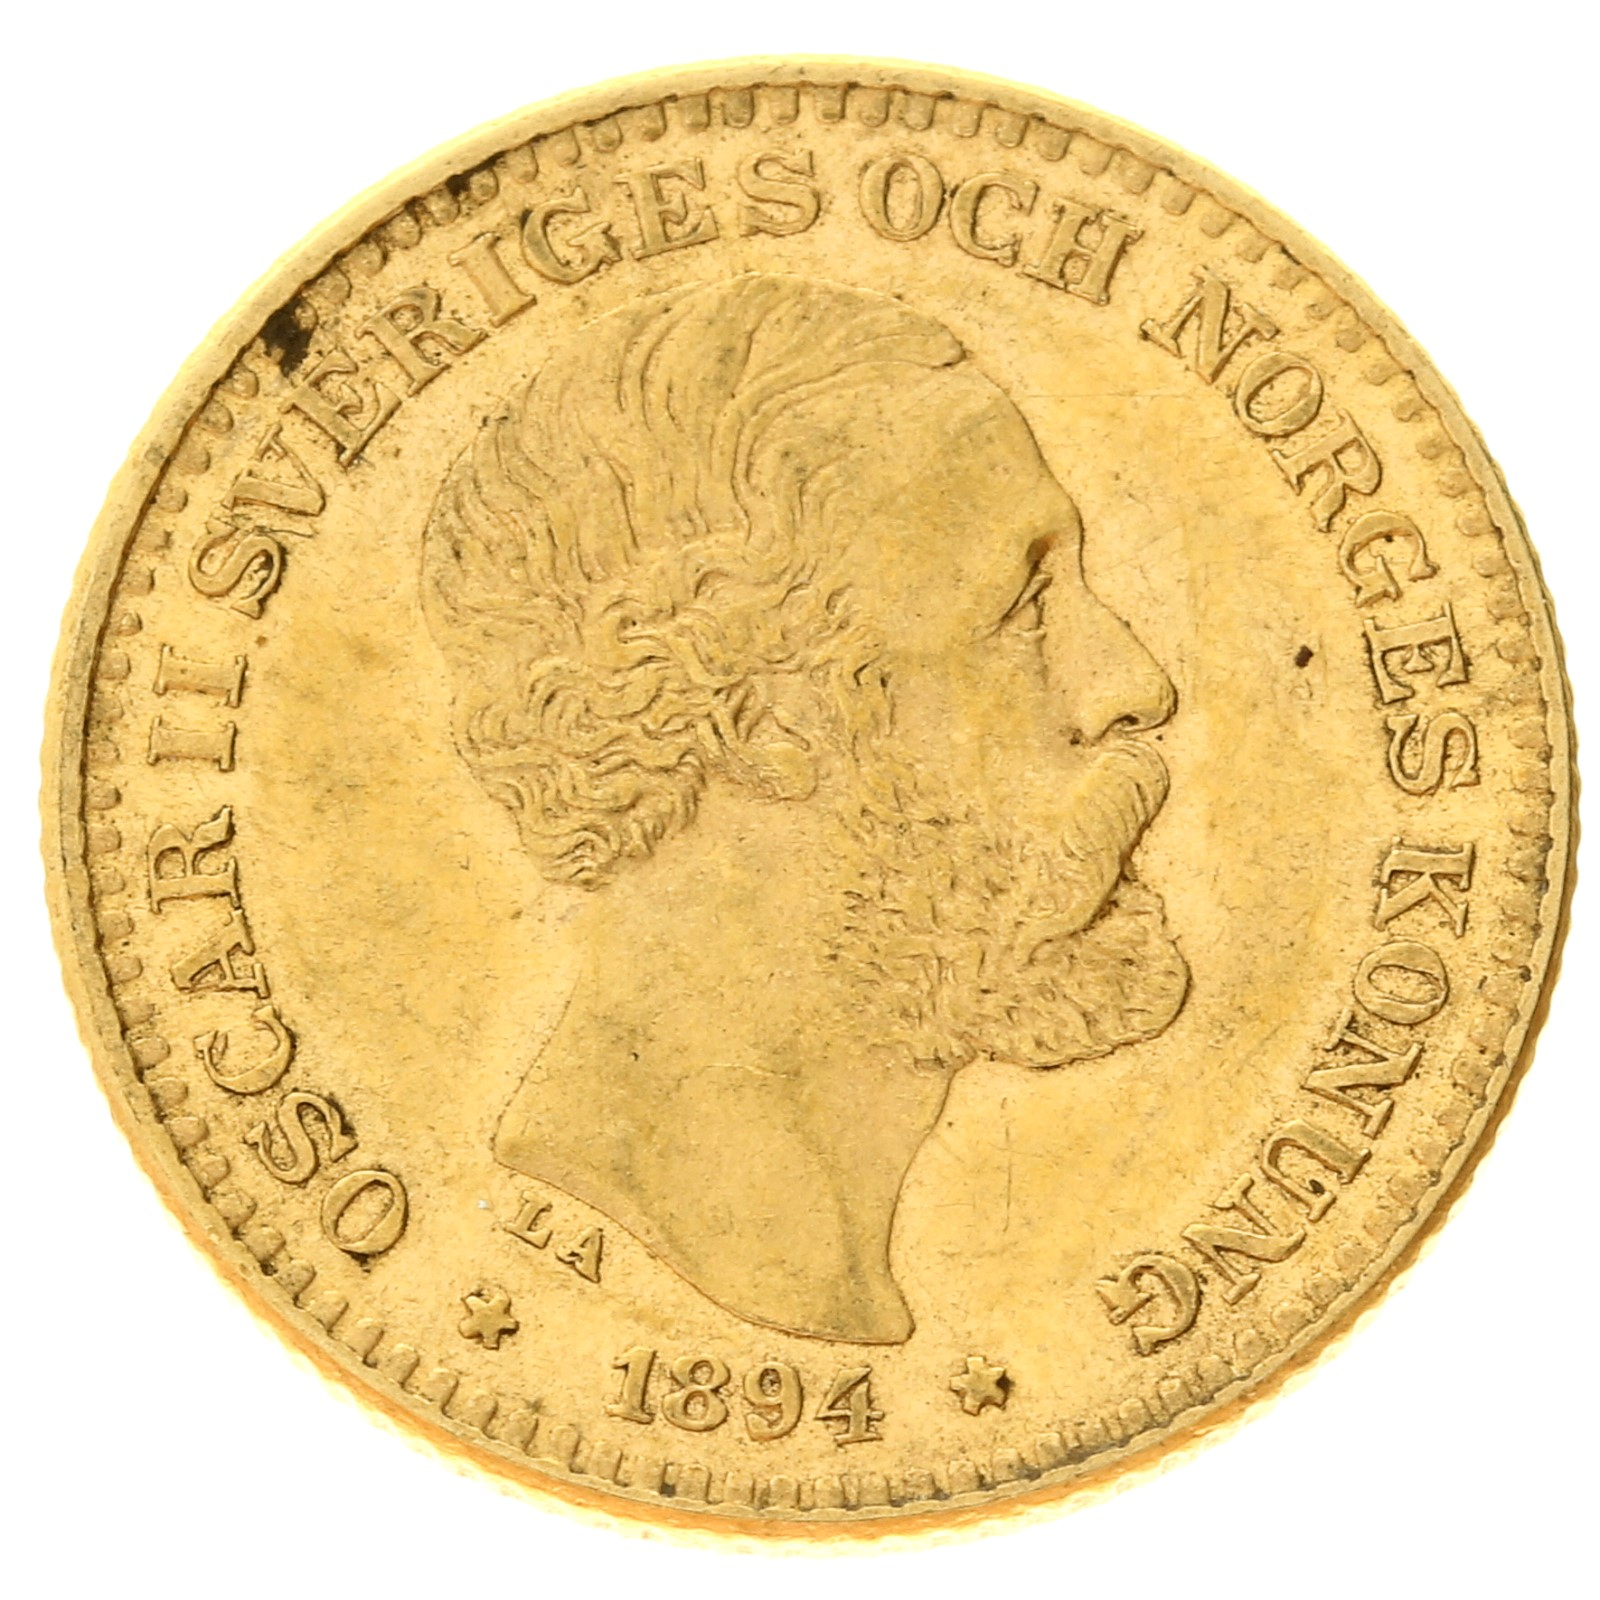 Sweden - 10 kronor - 1894 - Oscar II